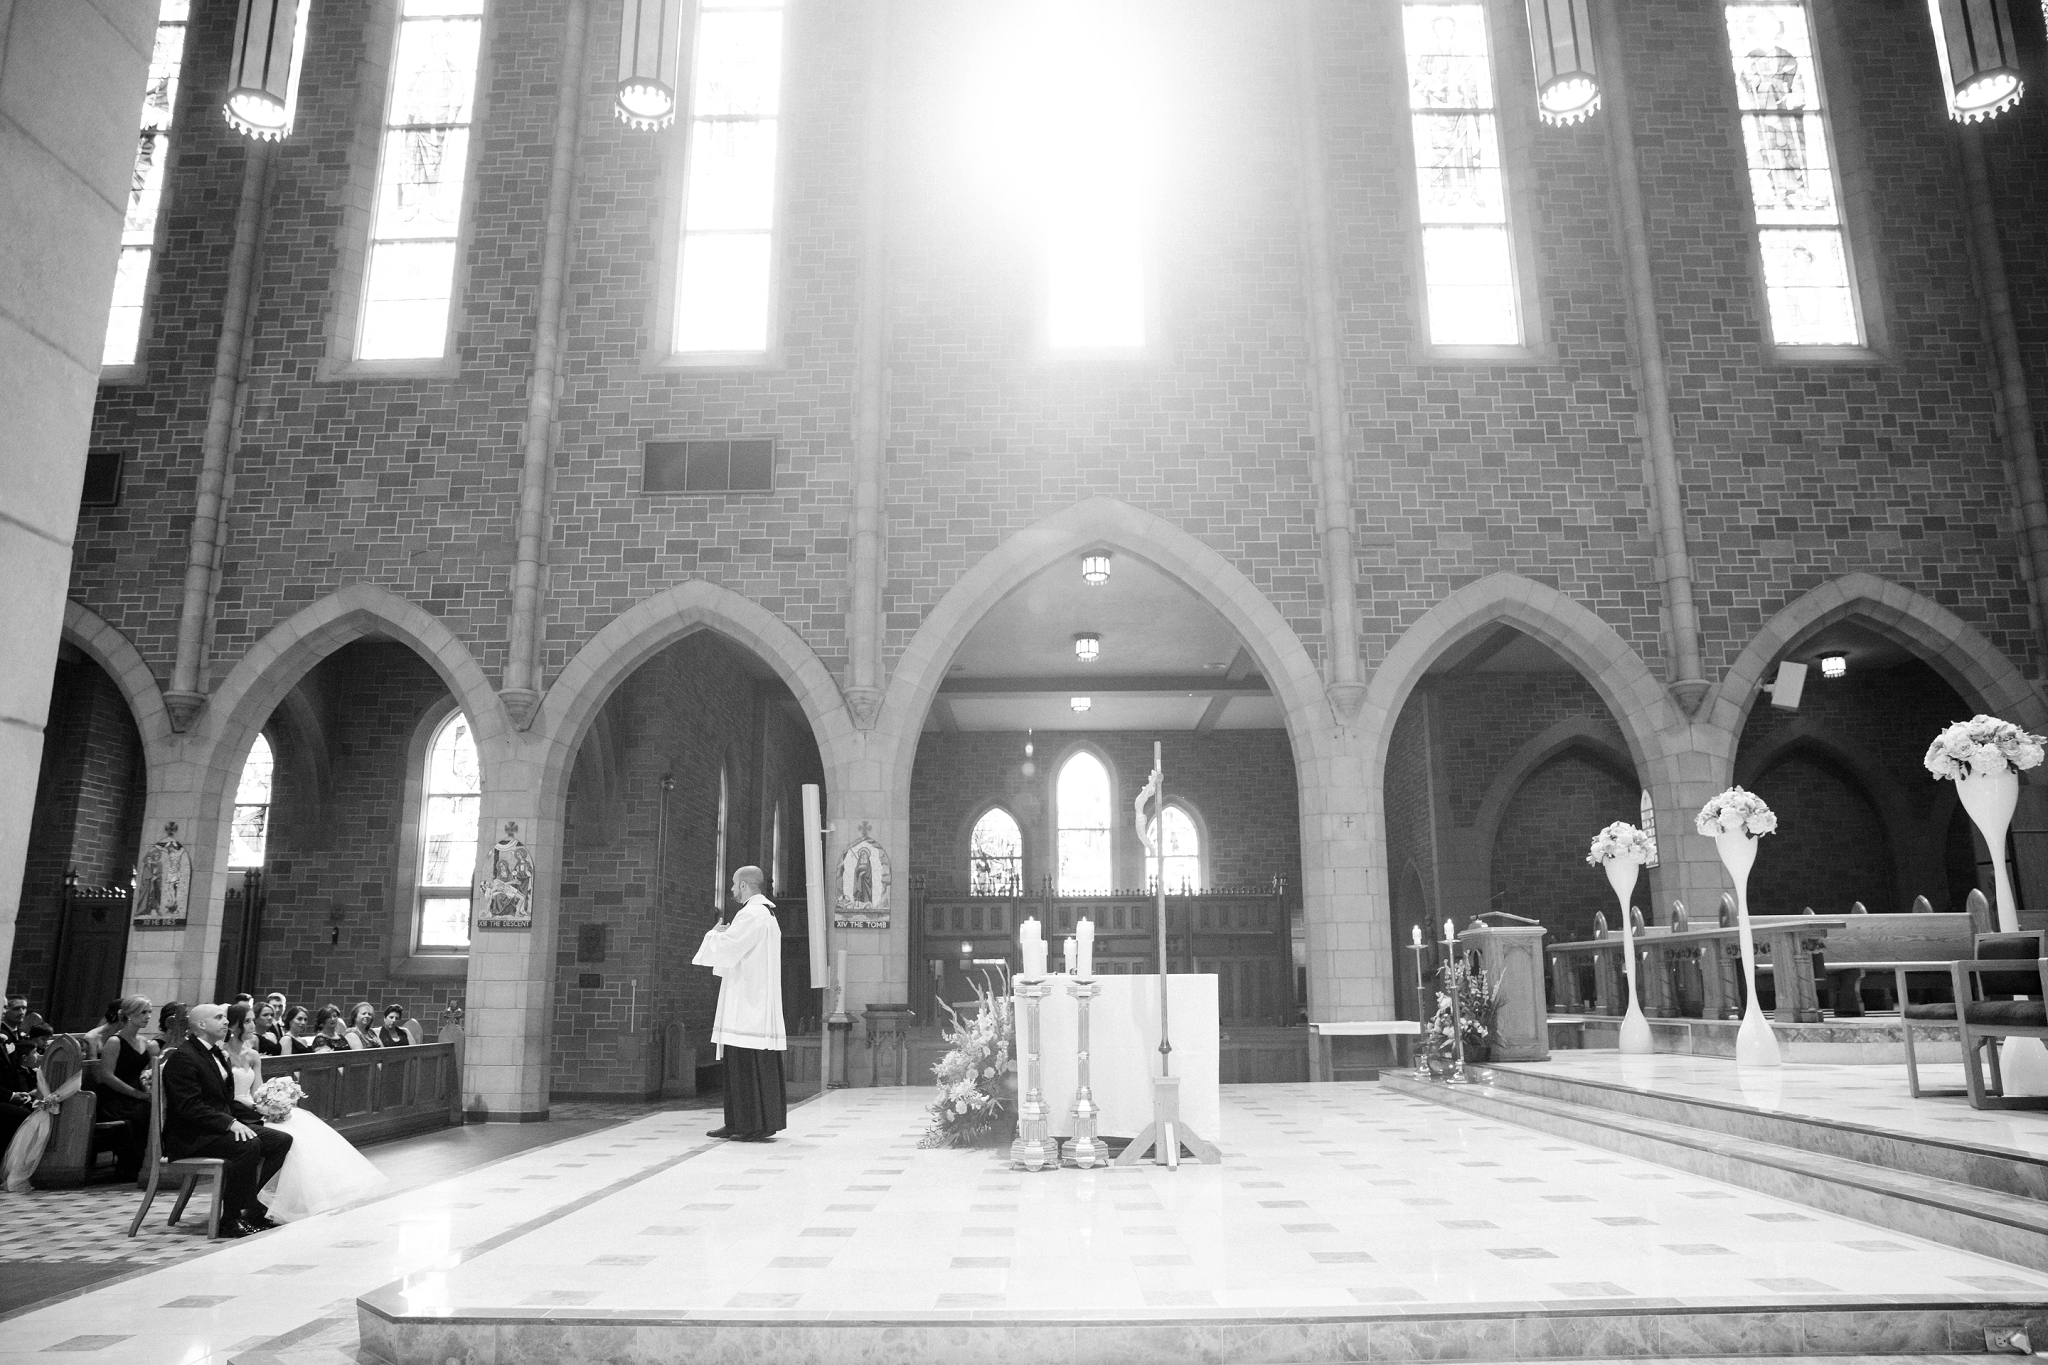 st. joseph basilica wedding photos